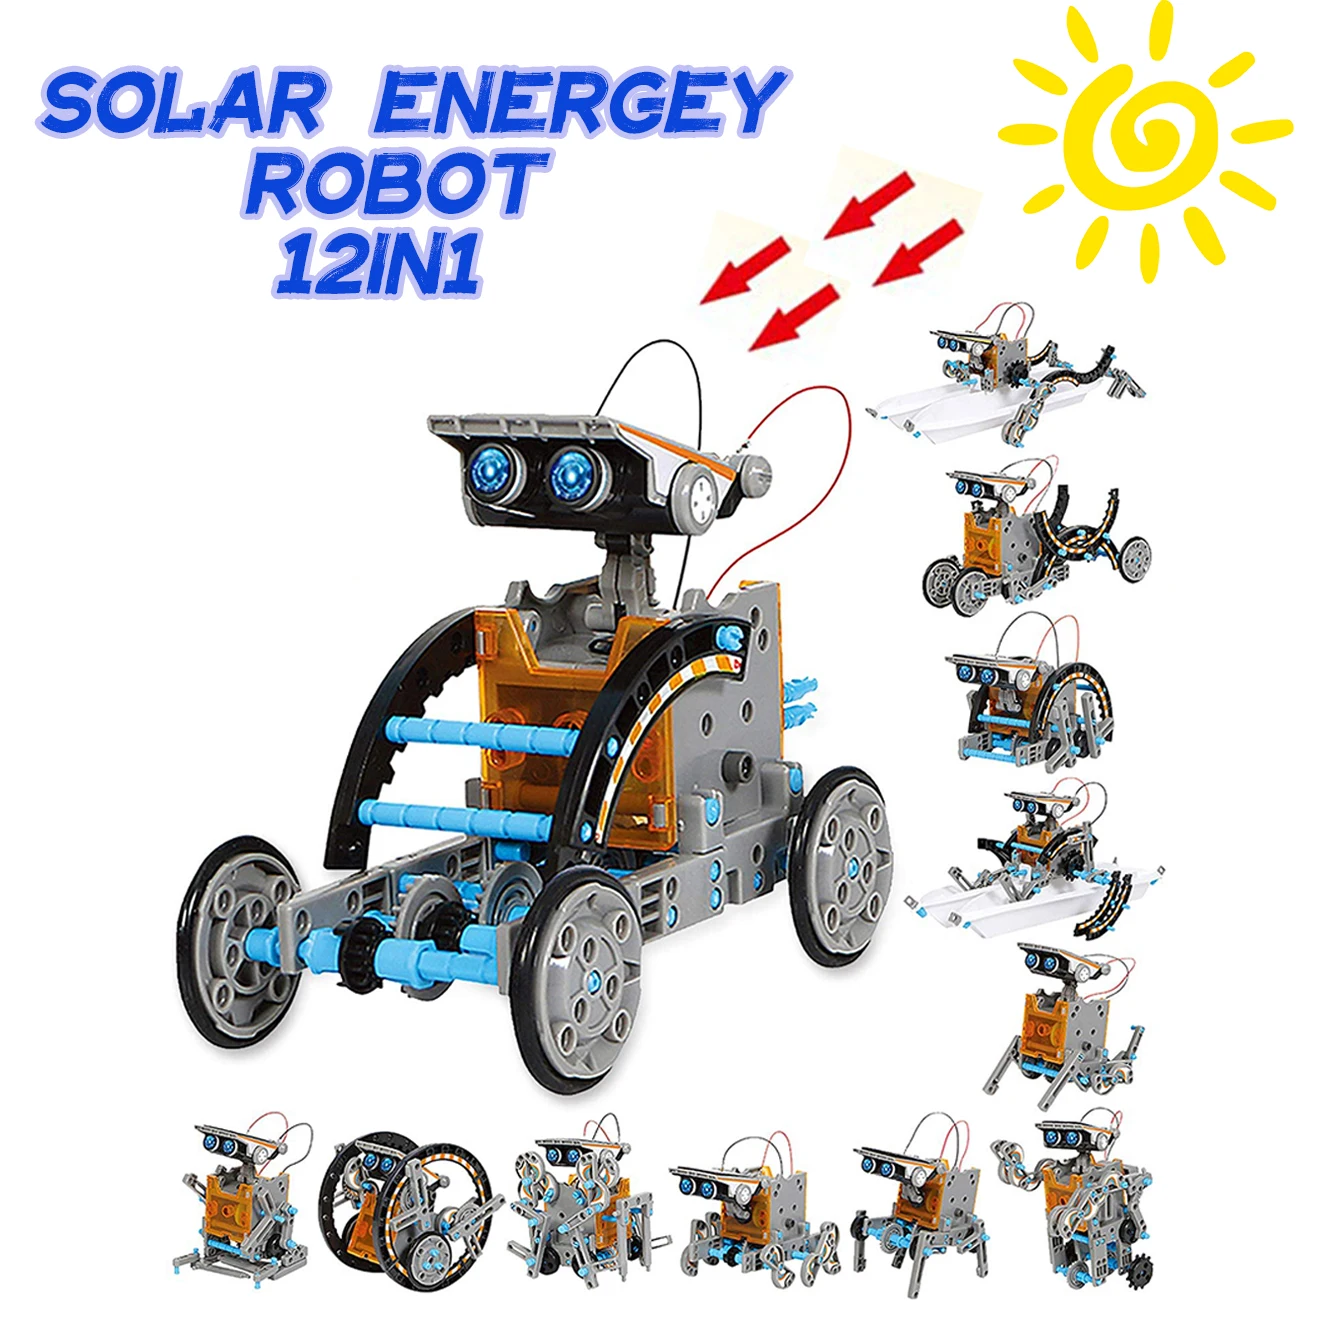 

12In1 Solar Energy Technological Gadgets Diy Assembled Model Mechanical Bricks Building Block Science Educational Toy Novel Toy